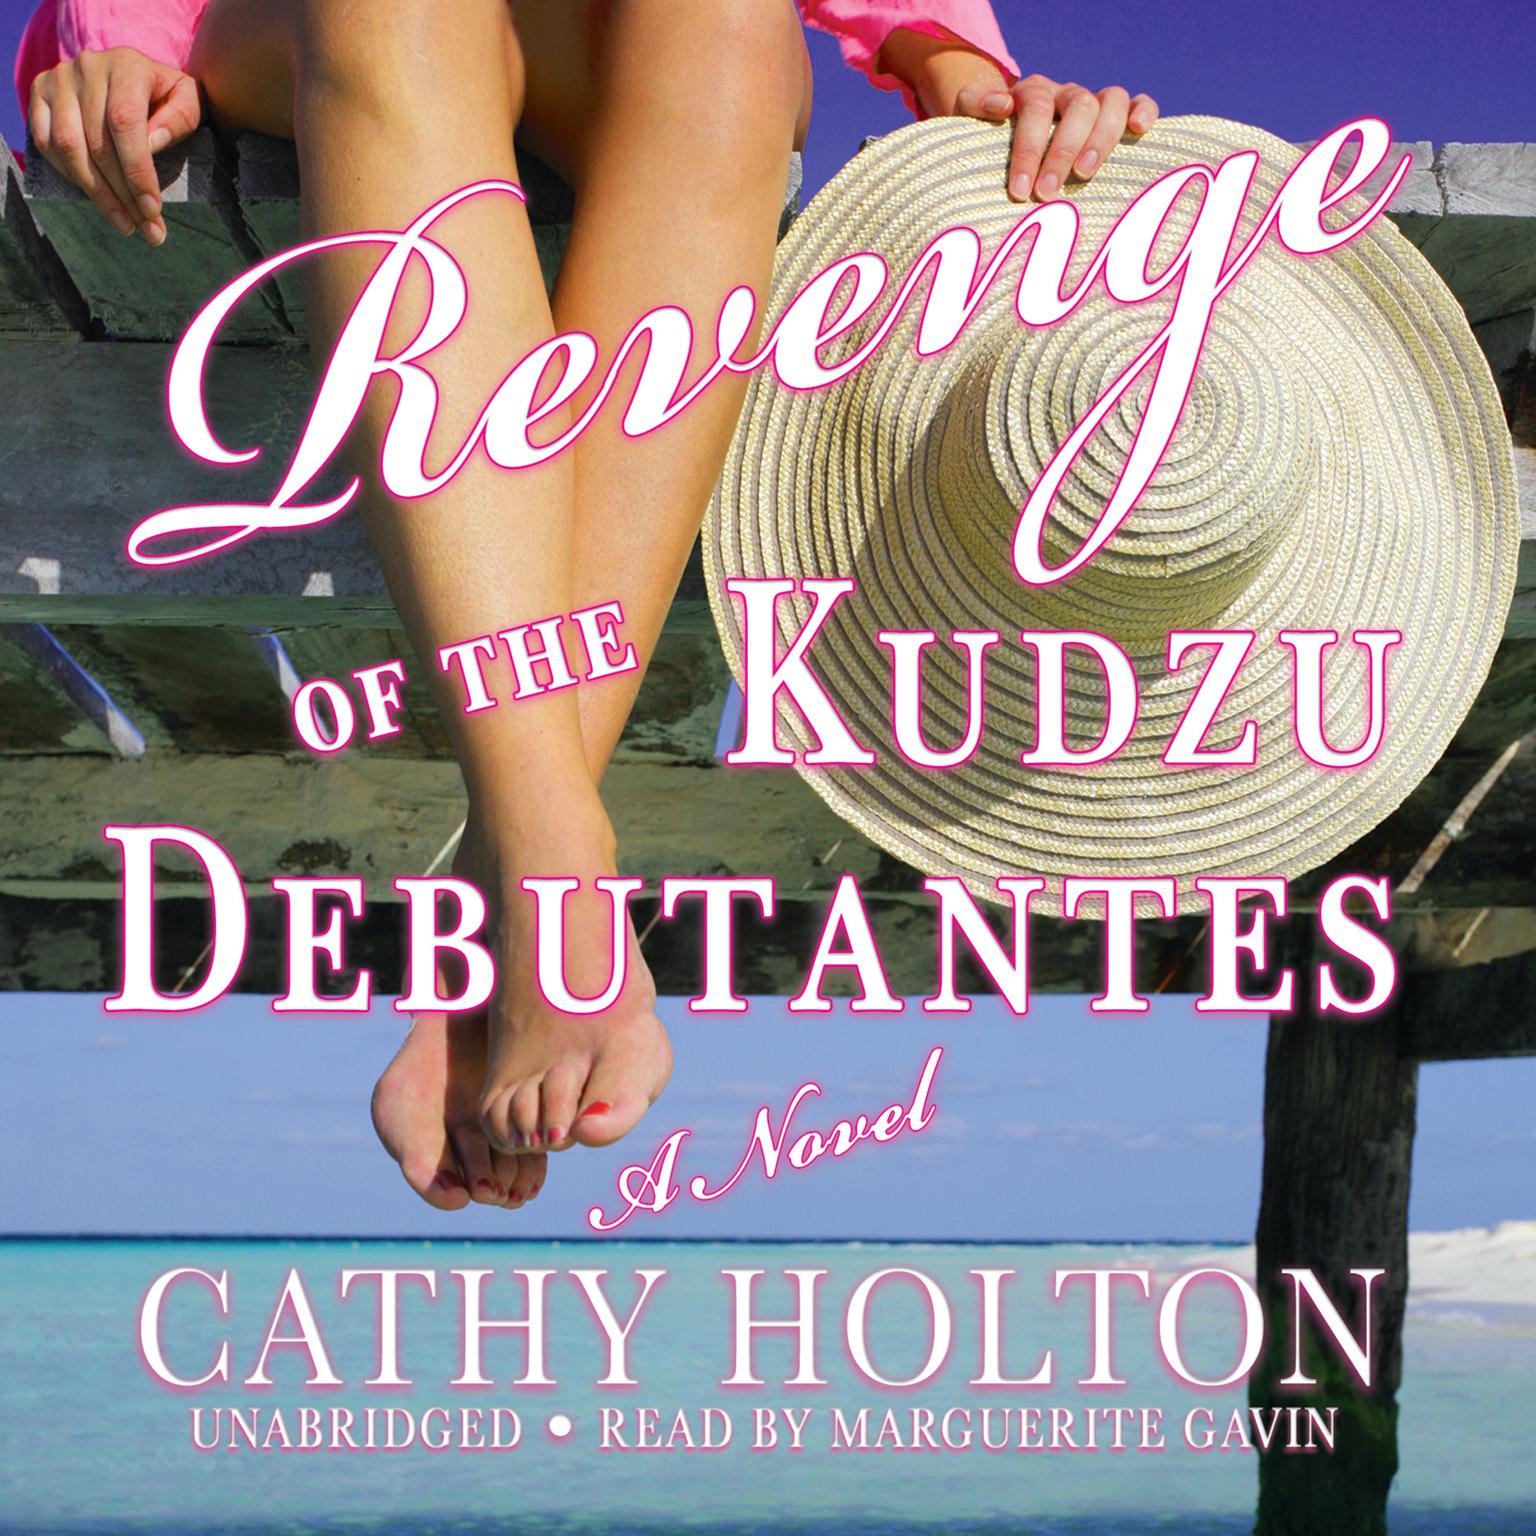 Revenge of the Kudzu Debutantes: A Novel Audiobook, by Cathy Holton